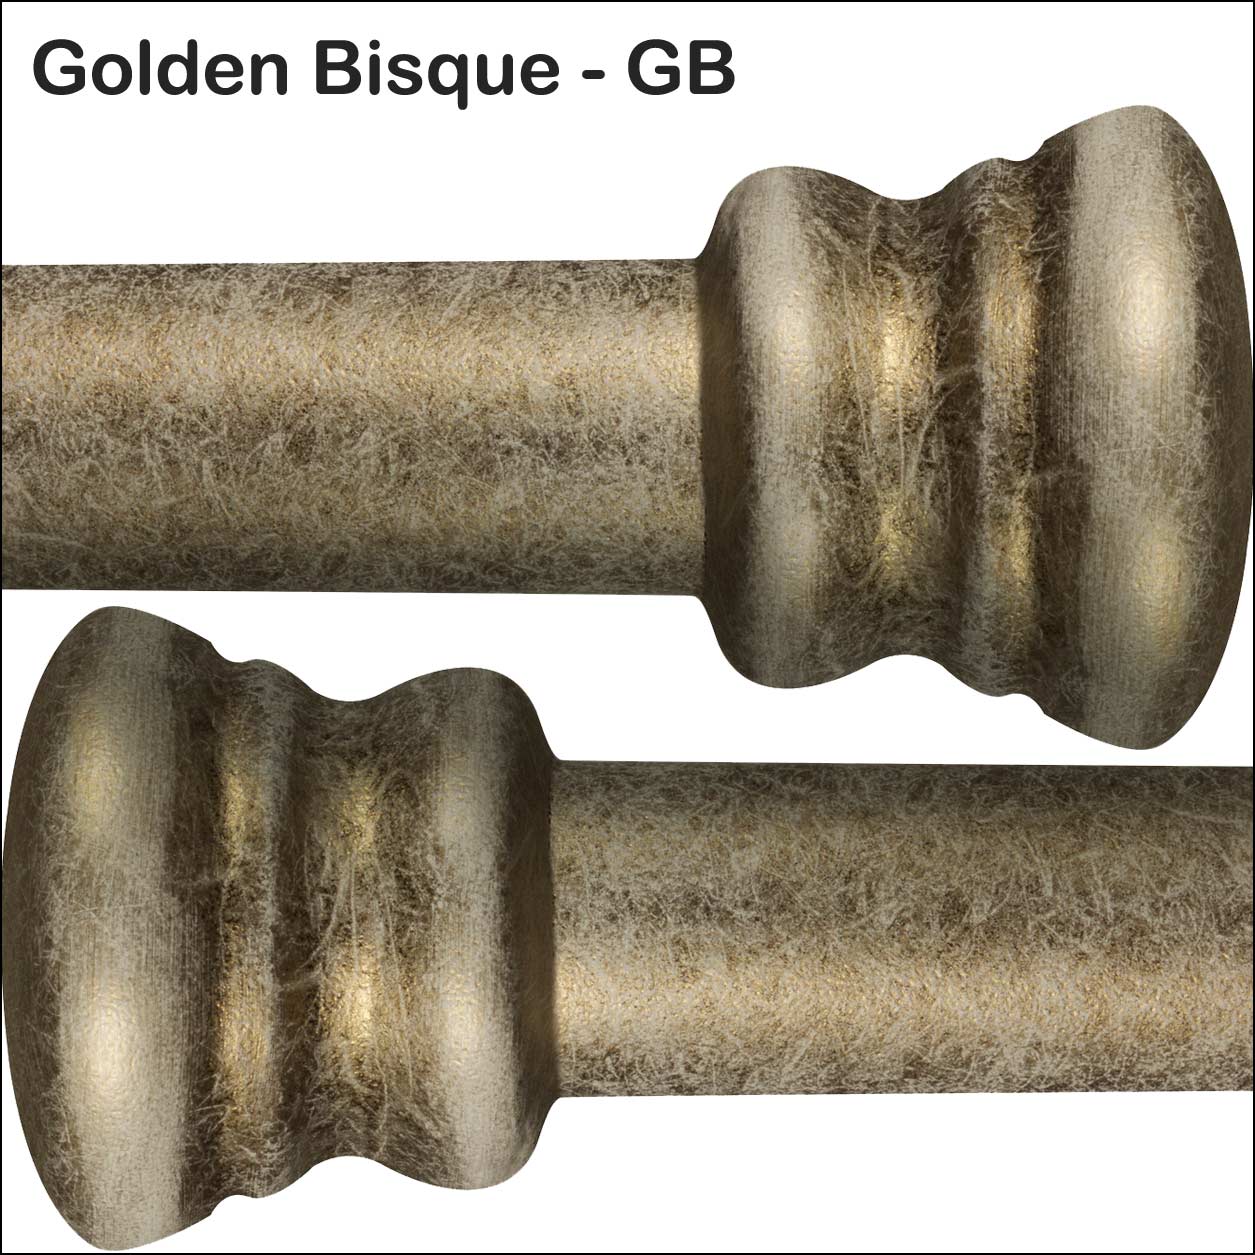 Golden Bisque GB Powder Coating Finish Wesley Allen Matriae